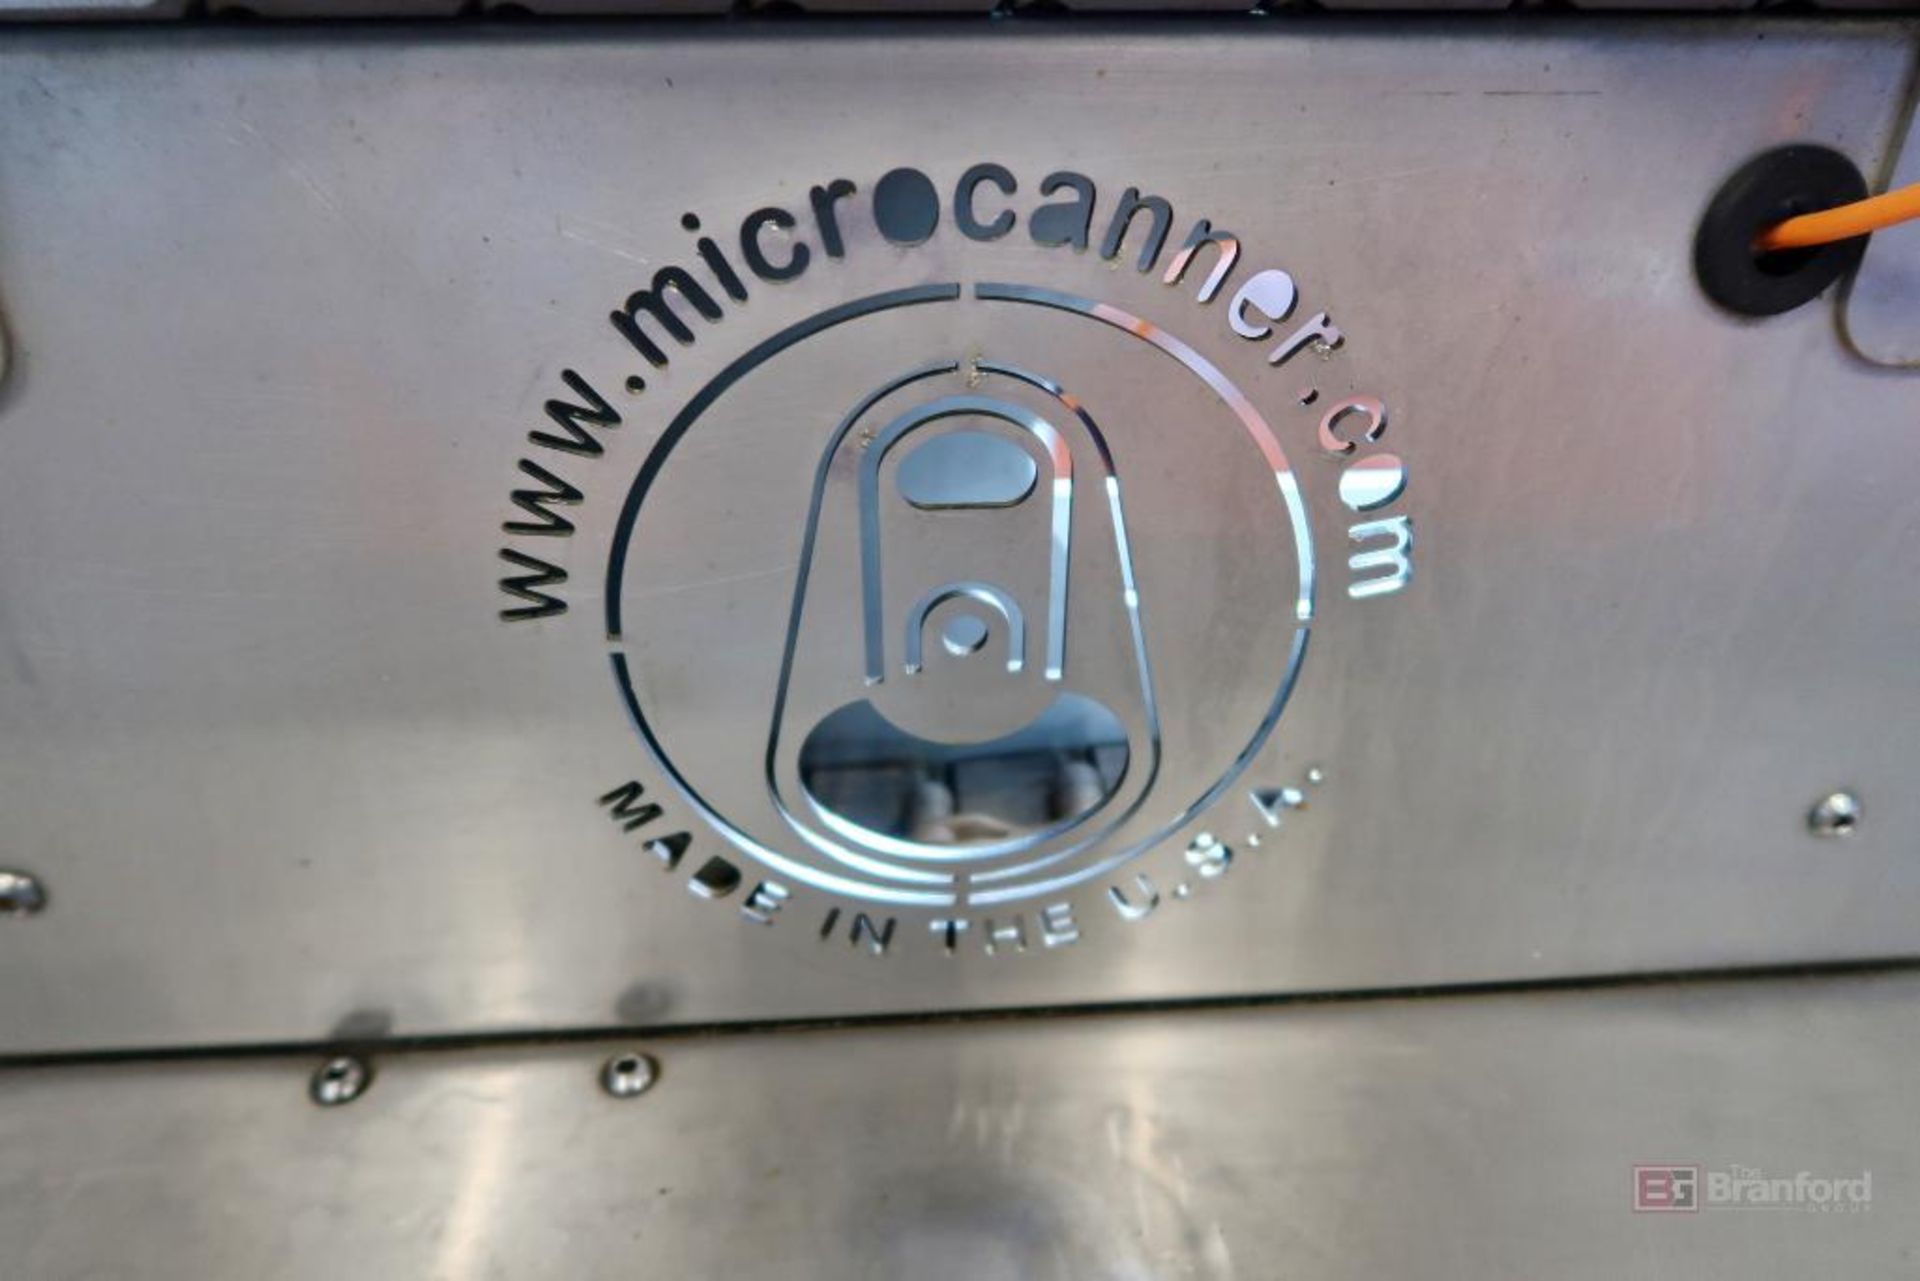 Microcanner Model MC-CRAFT, 4-Valve Beer Canning Line - Image 5 of 18